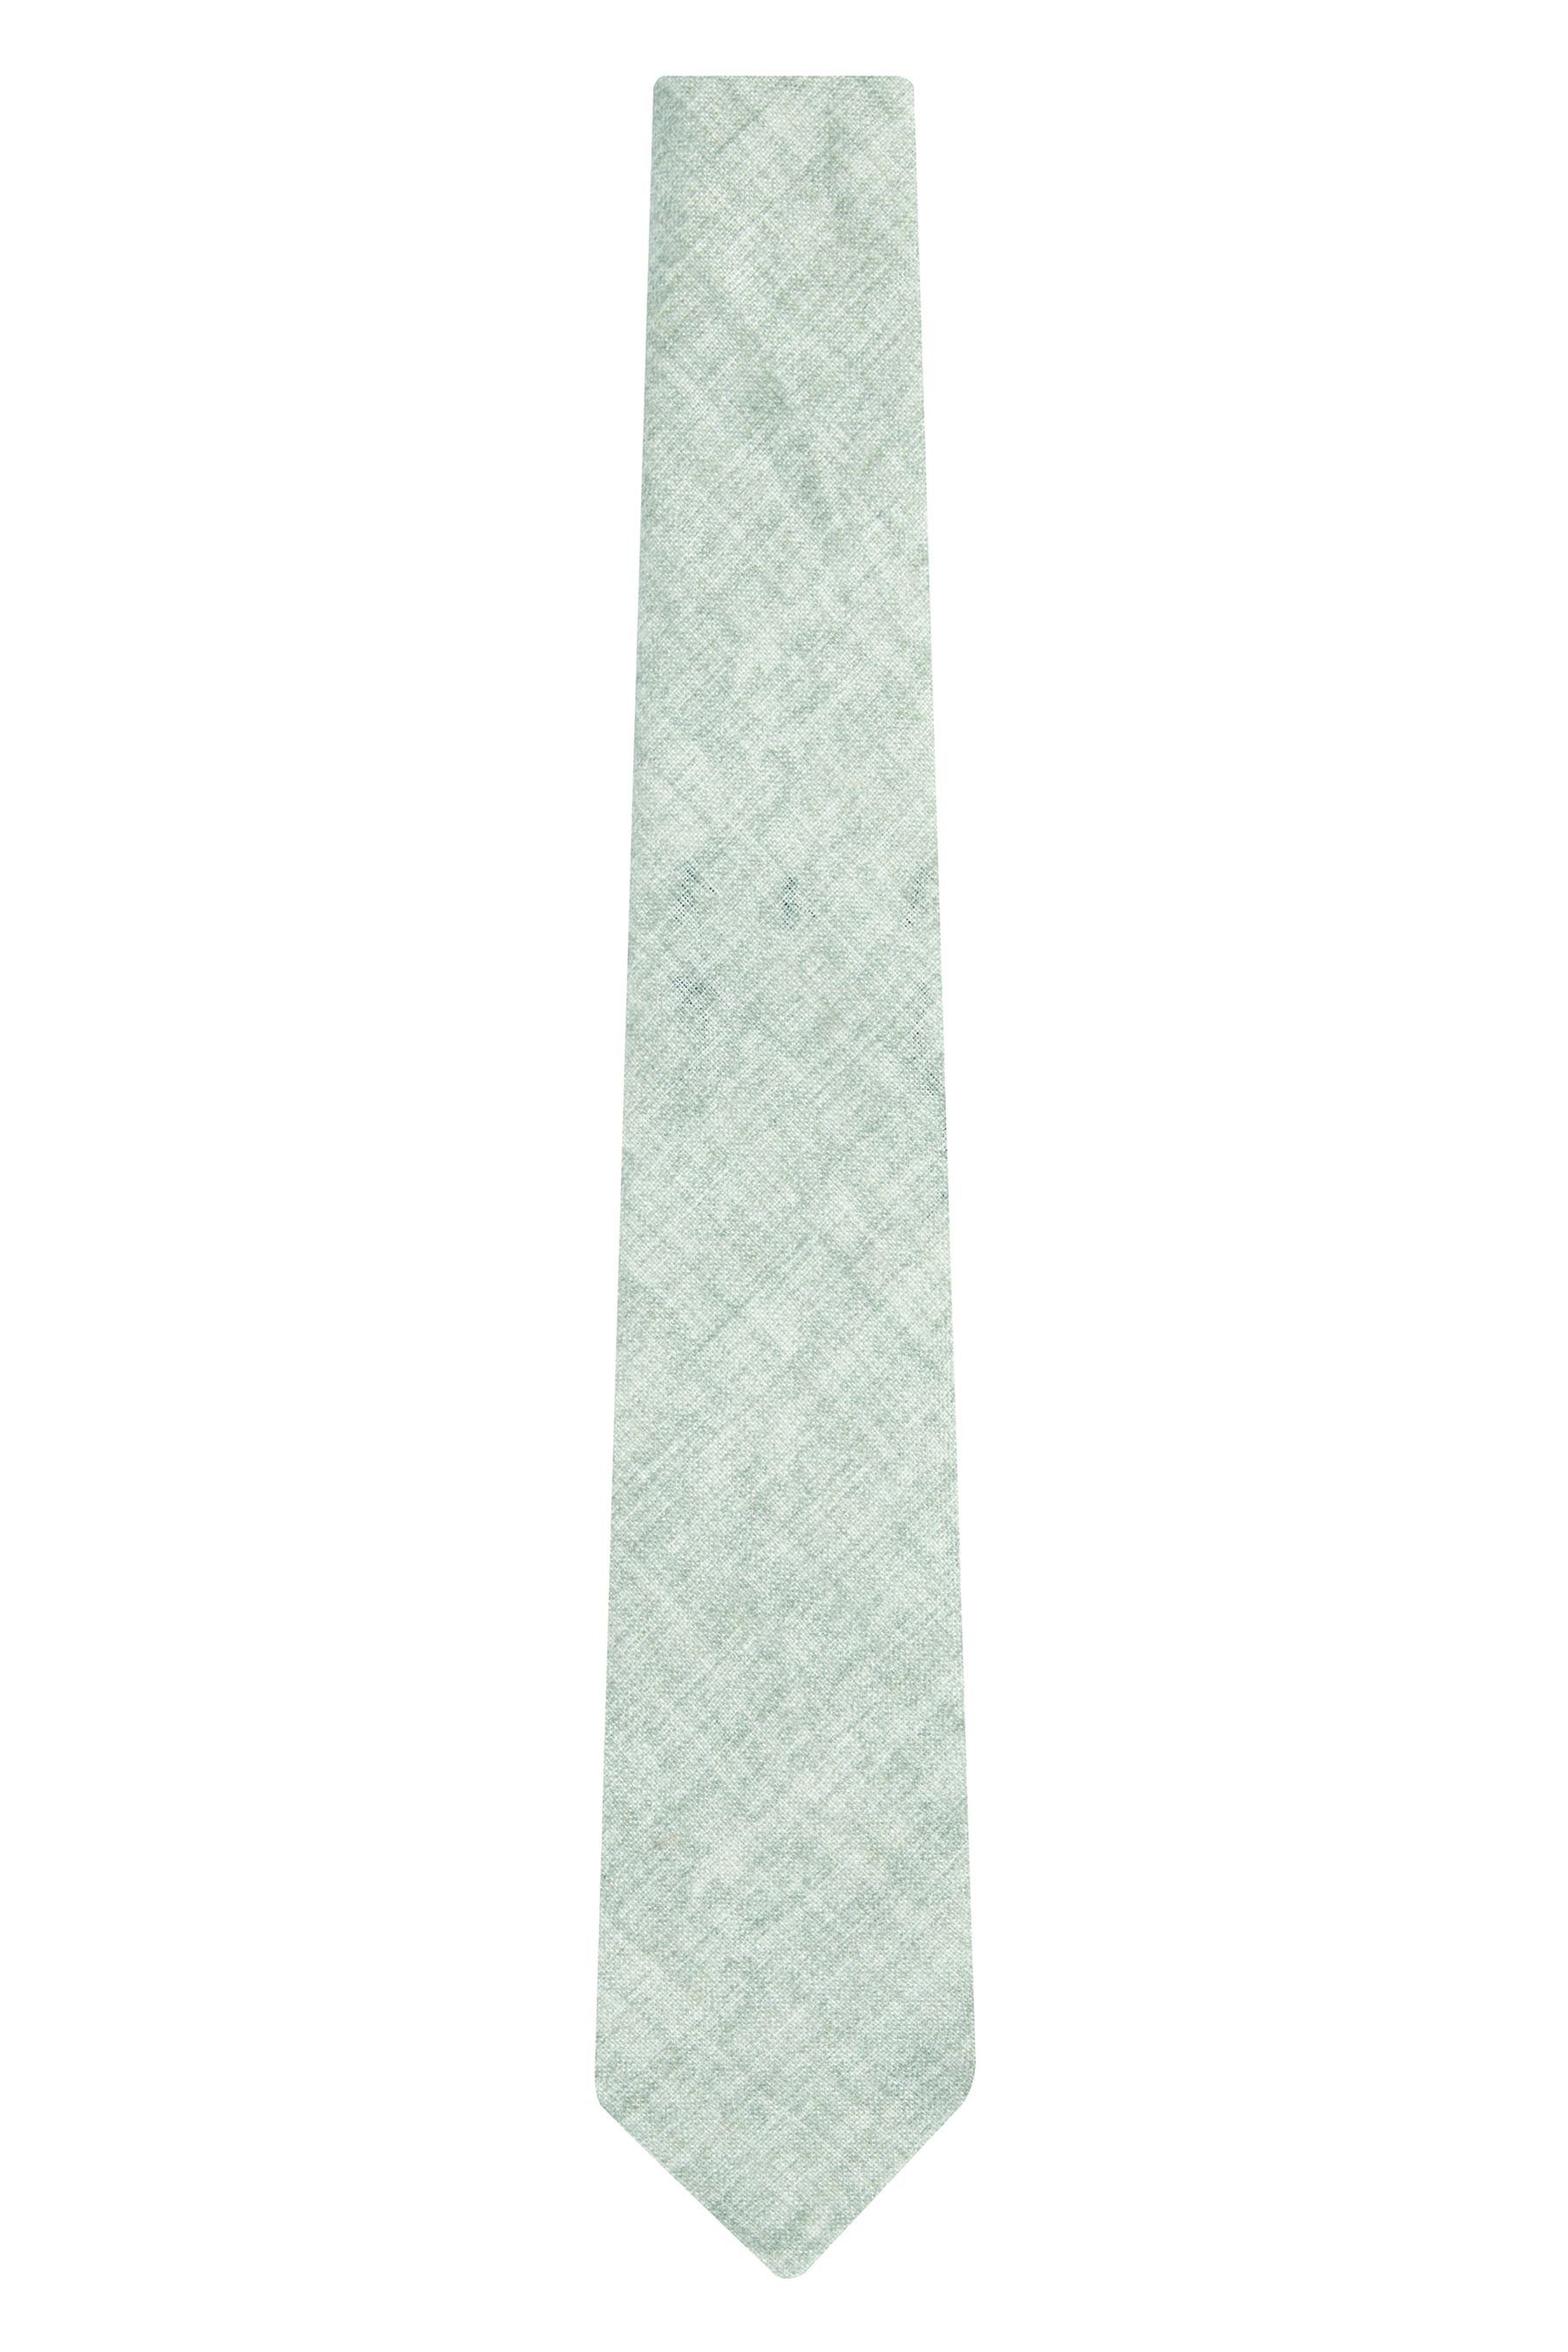 Next Krawatte in Made Green Signature Italy Sage Leinen-Krawatte (1-St)